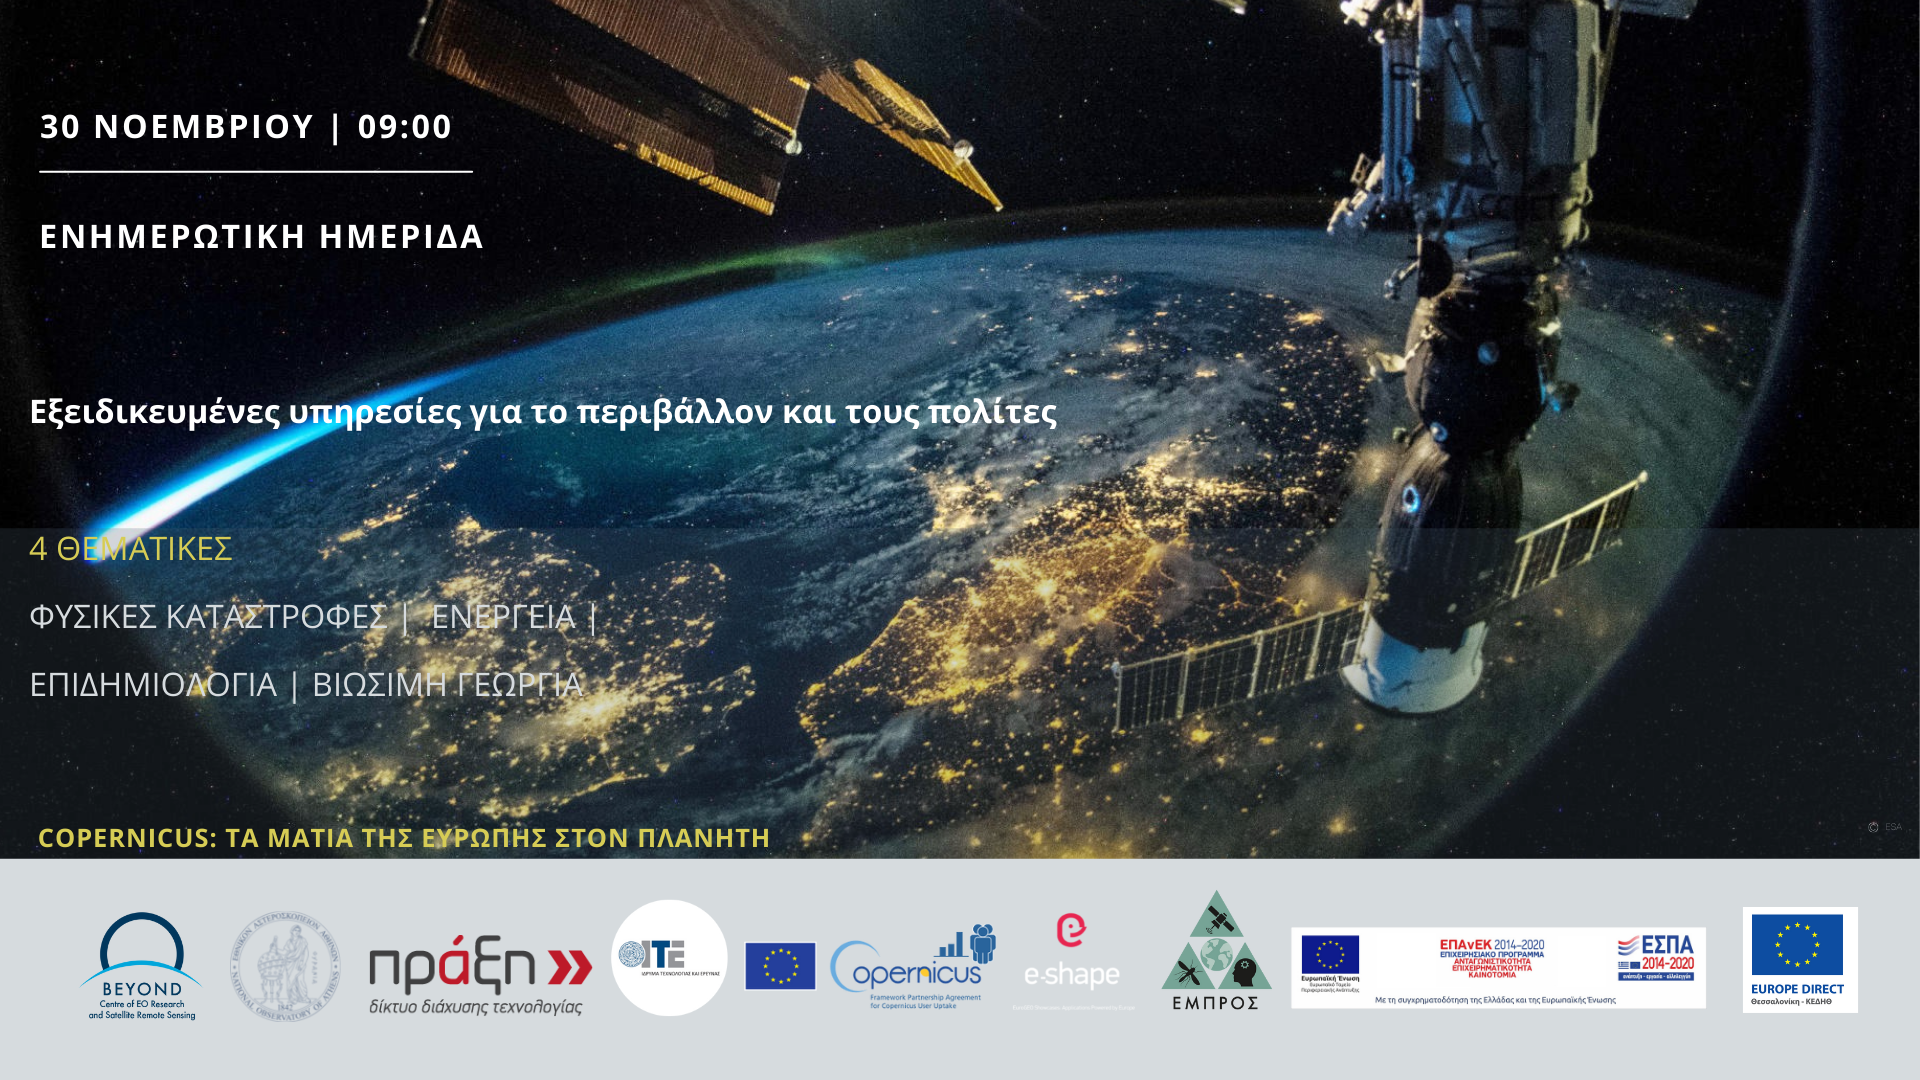  Copernicus Θεσσαλονίκη 30Νοε21 Εξώφυλλο εκδήλωσης Facebook final